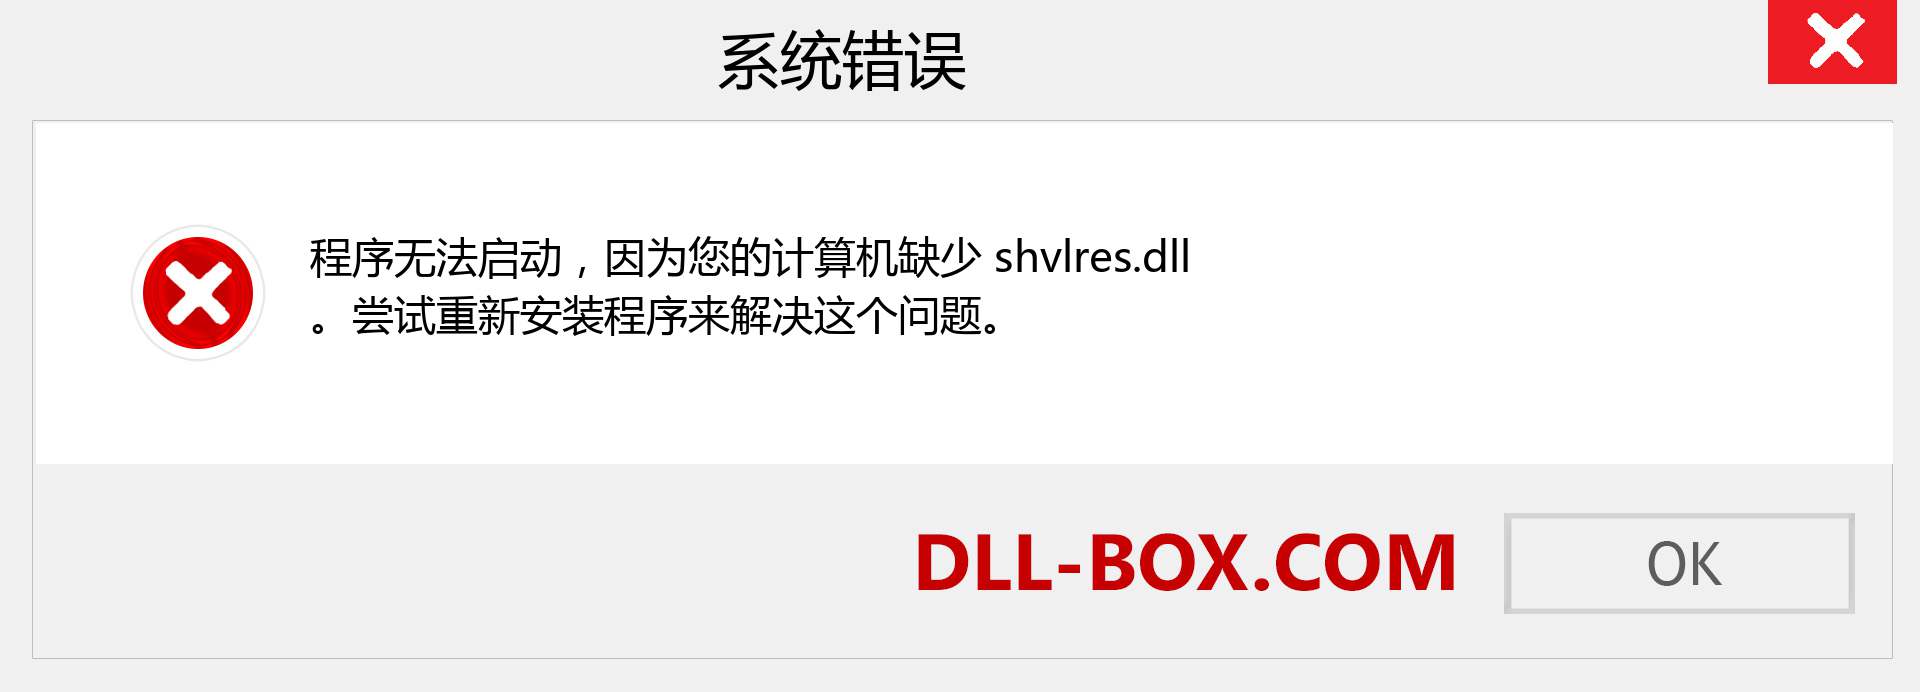 shvlres.dll 文件丢失？。 适用于 Windows 7、8、10 的下载 - 修复 Windows、照片、图像上的 shvlres dll 丢失错误